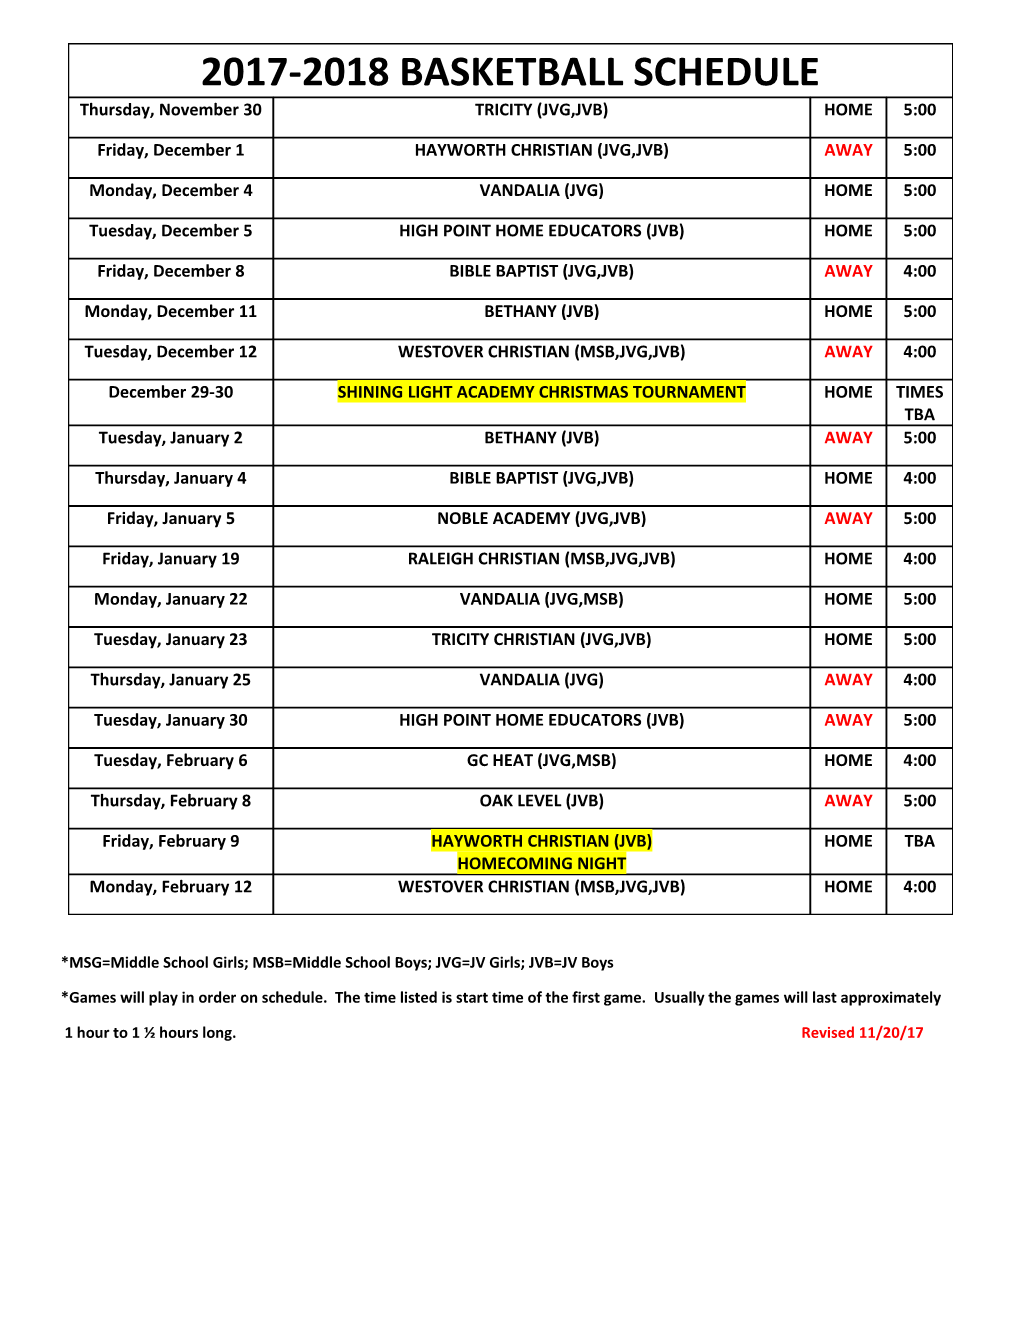 2017-2018 Basketball Schedule